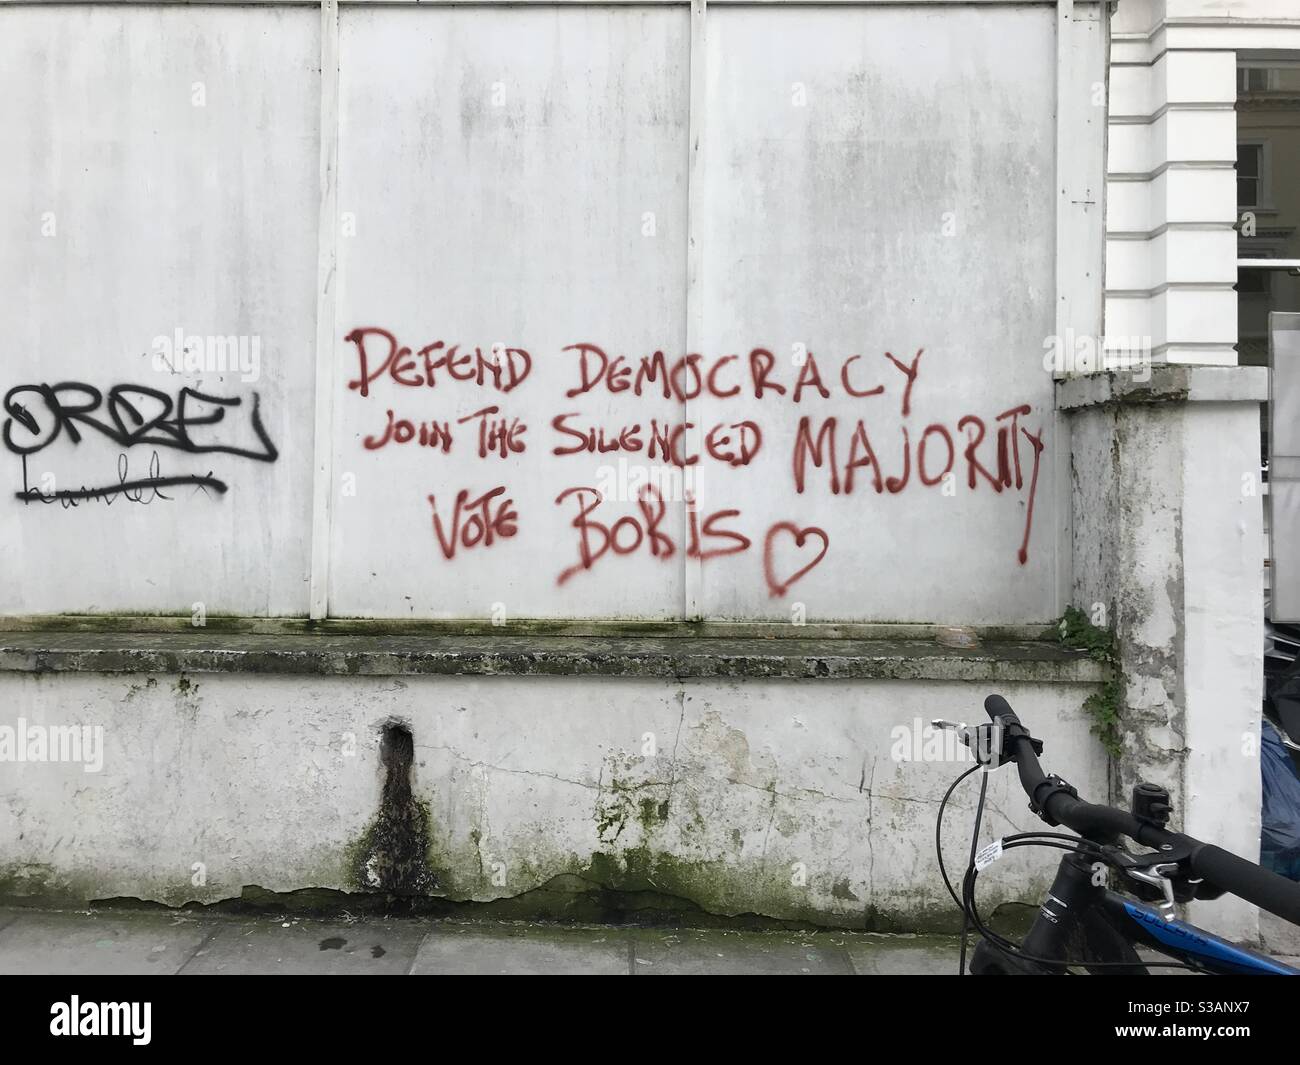 Defend Democracy Graffiti, Notting Hill Gate. Stock Photo